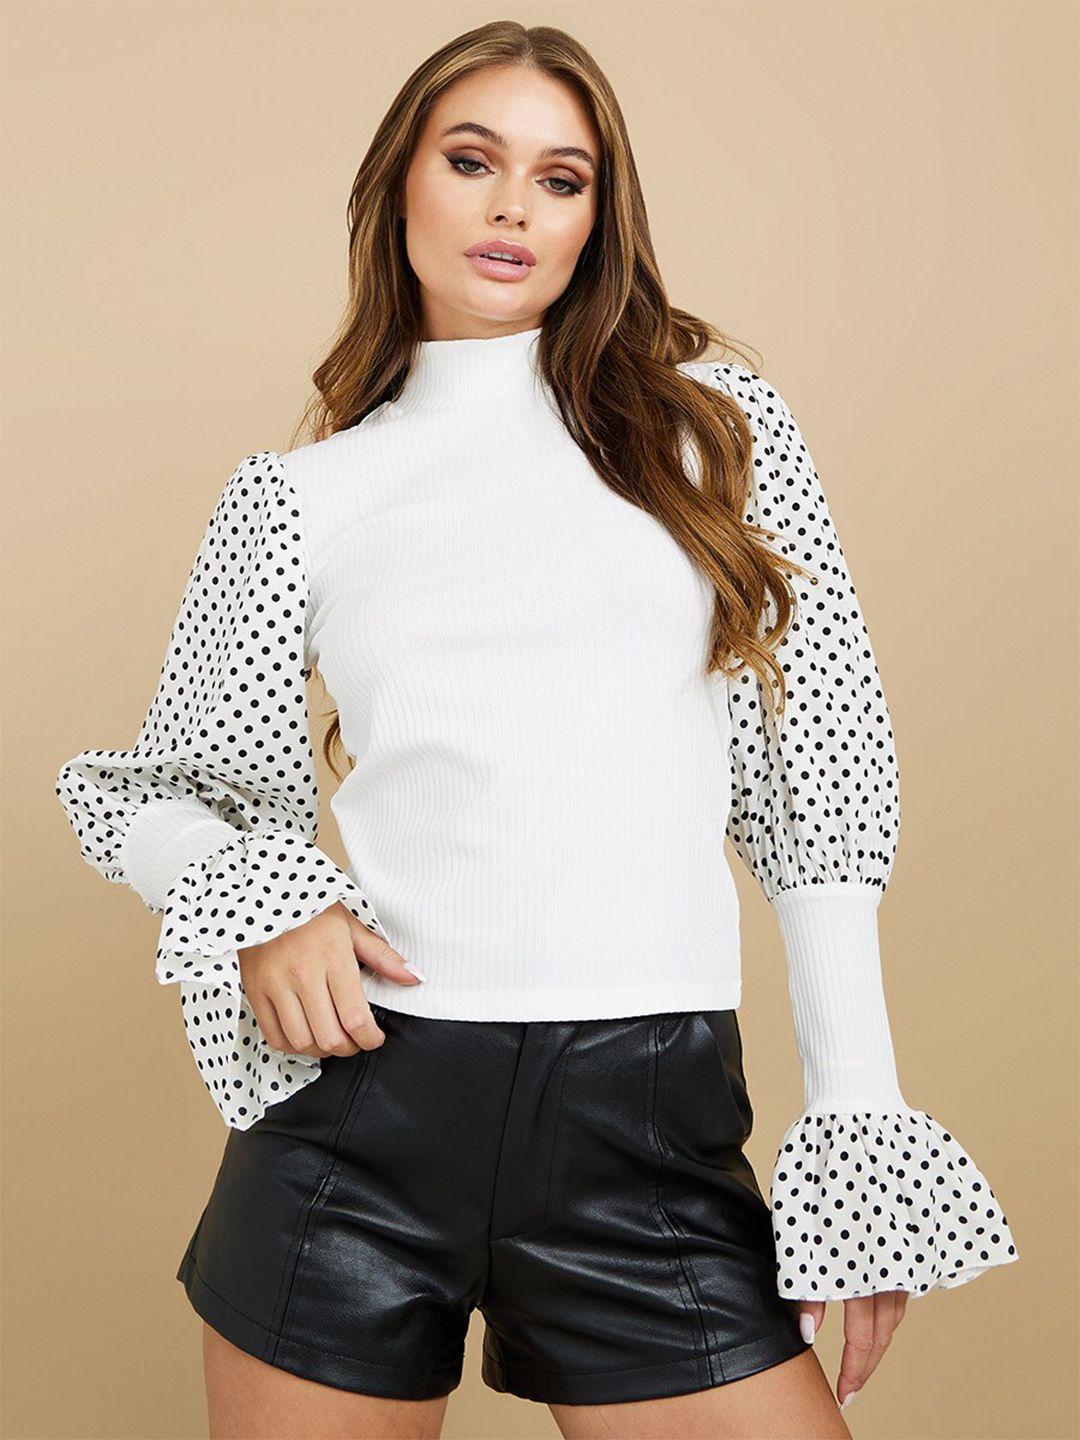 styli-polka-dots-printed-puff-sleeves-top